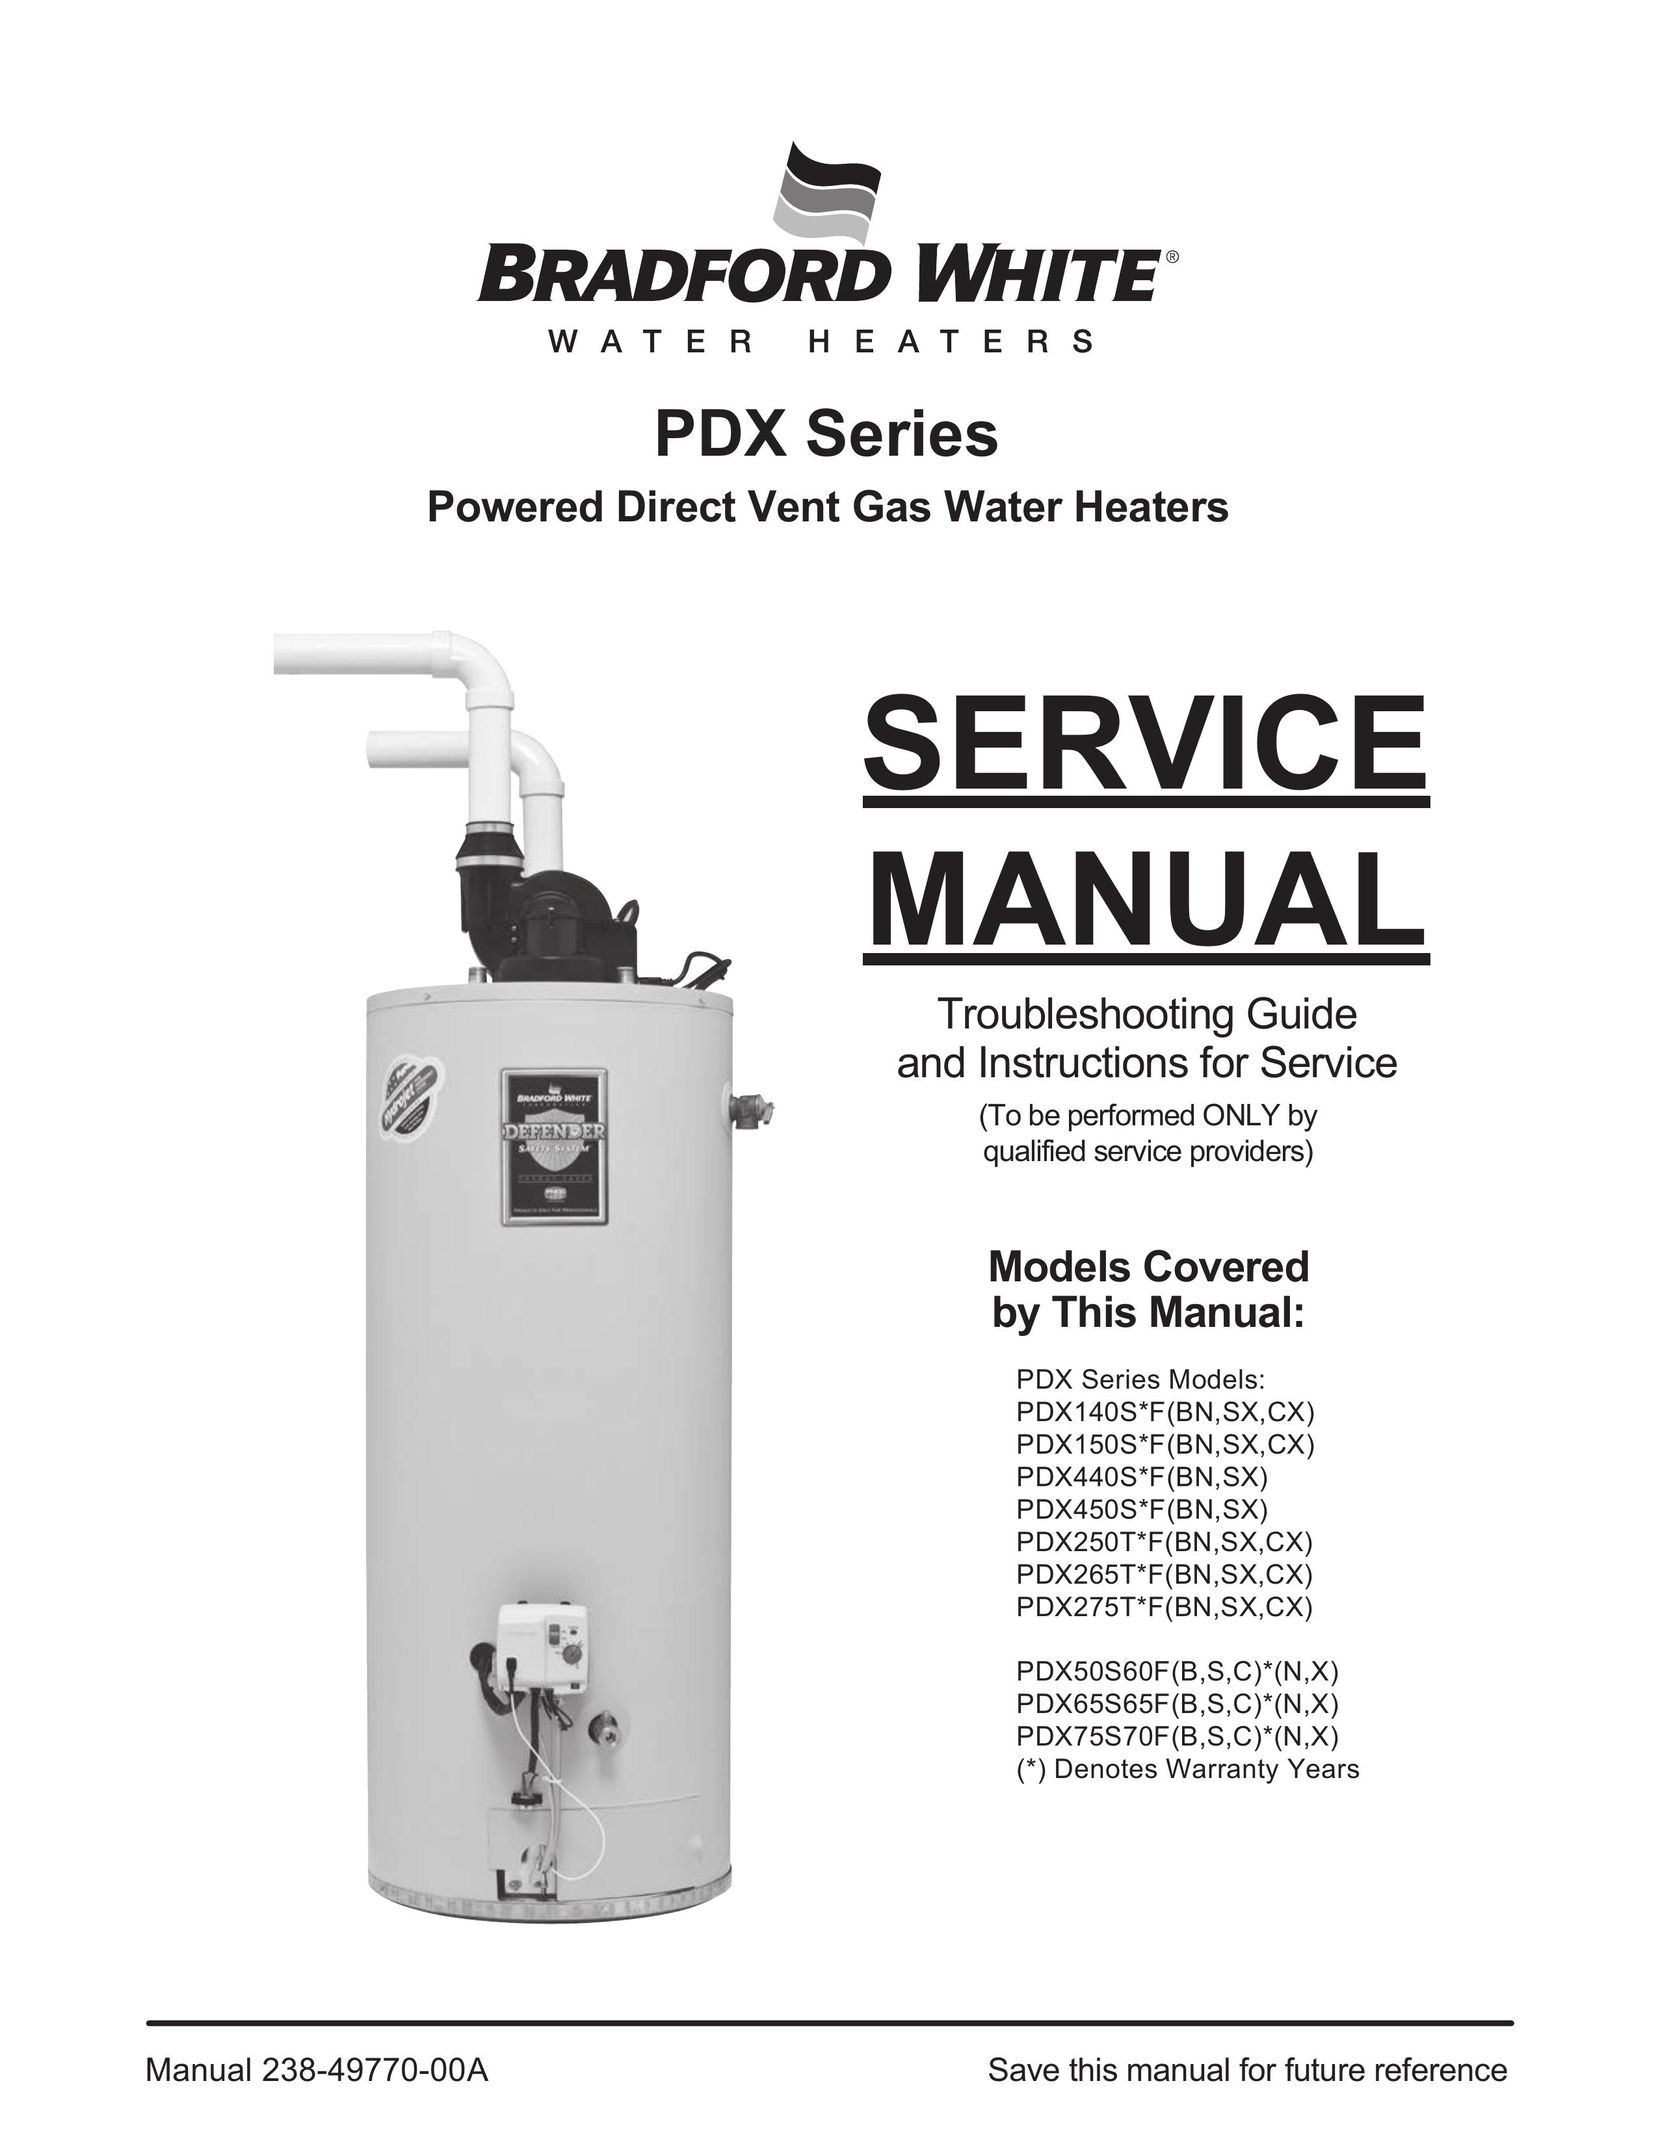 Honeywell PDX440S*F(BN,SX) Water Heater User Manual